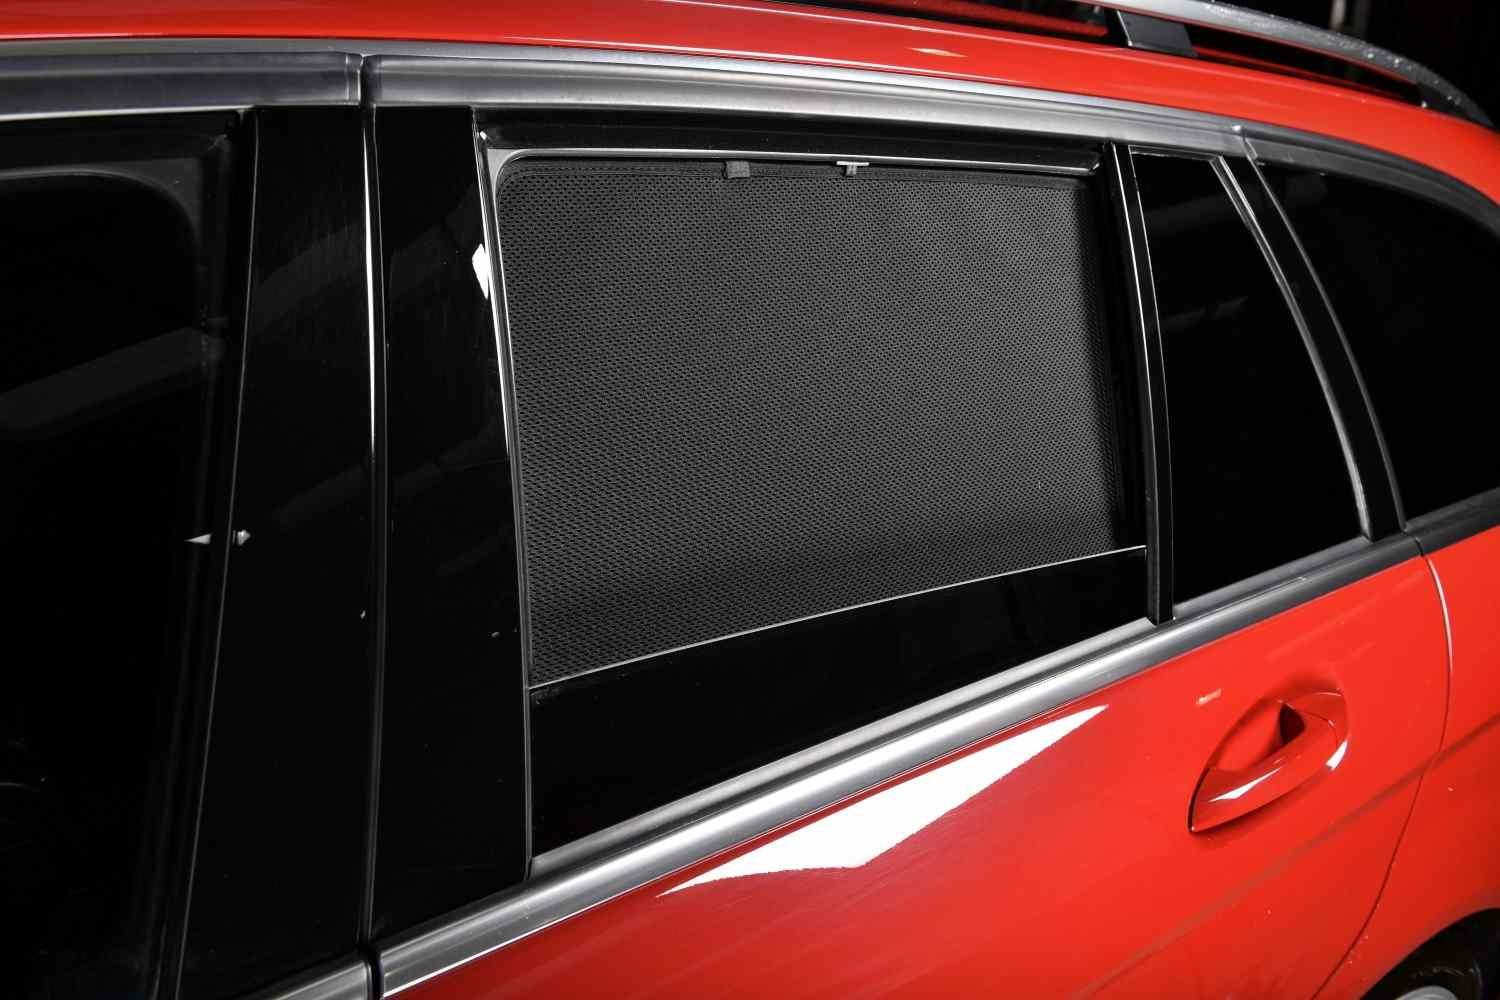 images/stories/virtuemart/product/example-car-shades-car-window-shades-set-4.jpg